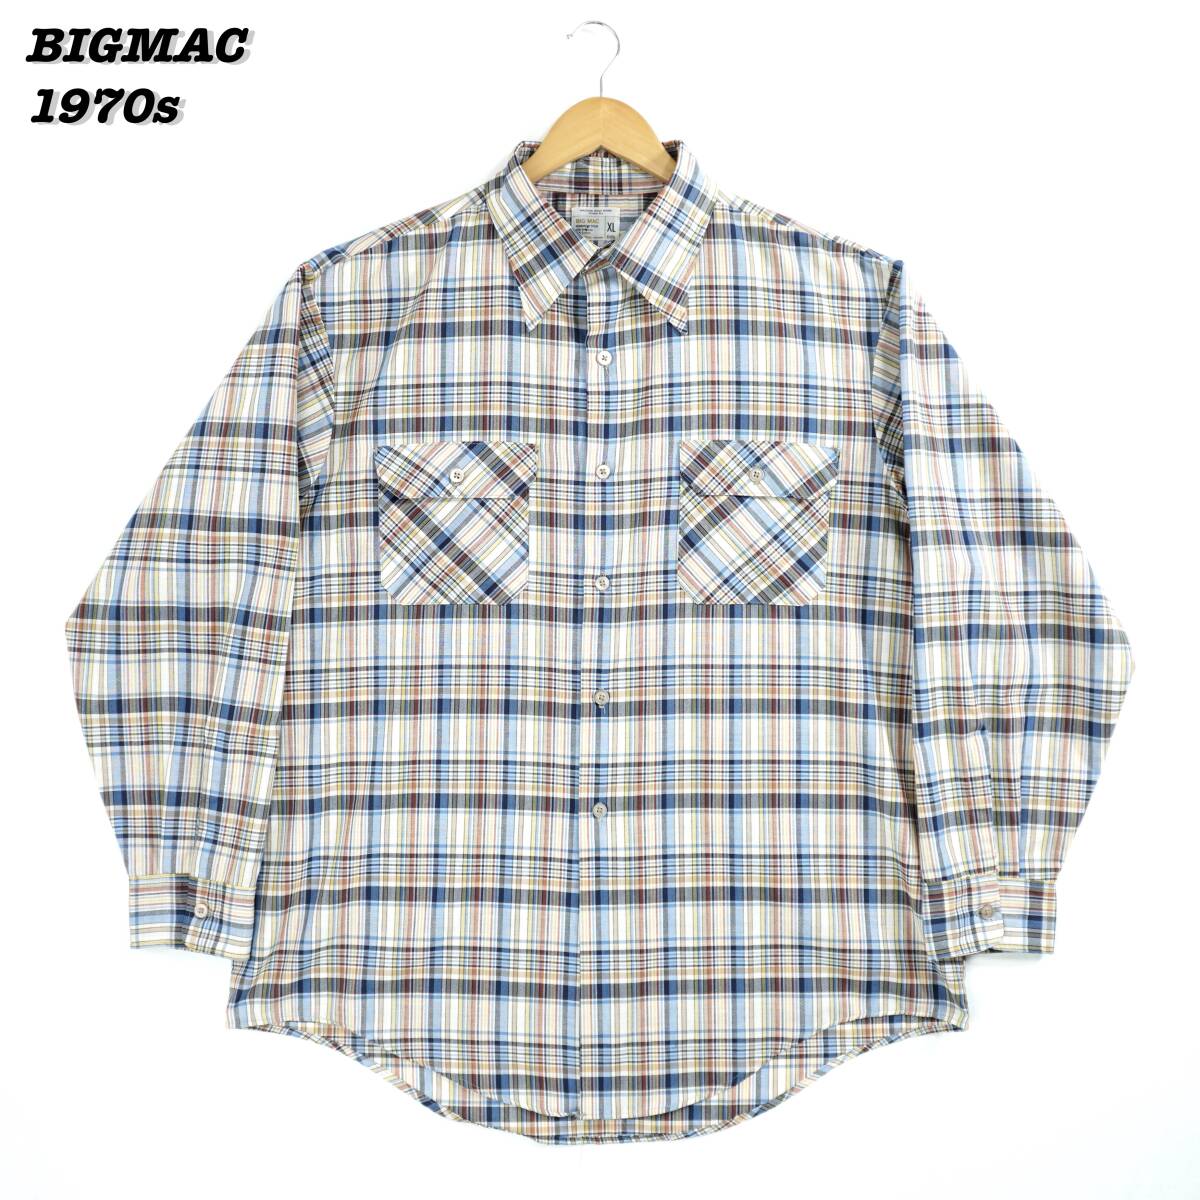 BIG MAC Shirts 1970s SH24026 Vintage ビッグマック シャツ ヴィンテージシャツ ヴィンテージ 1970年代